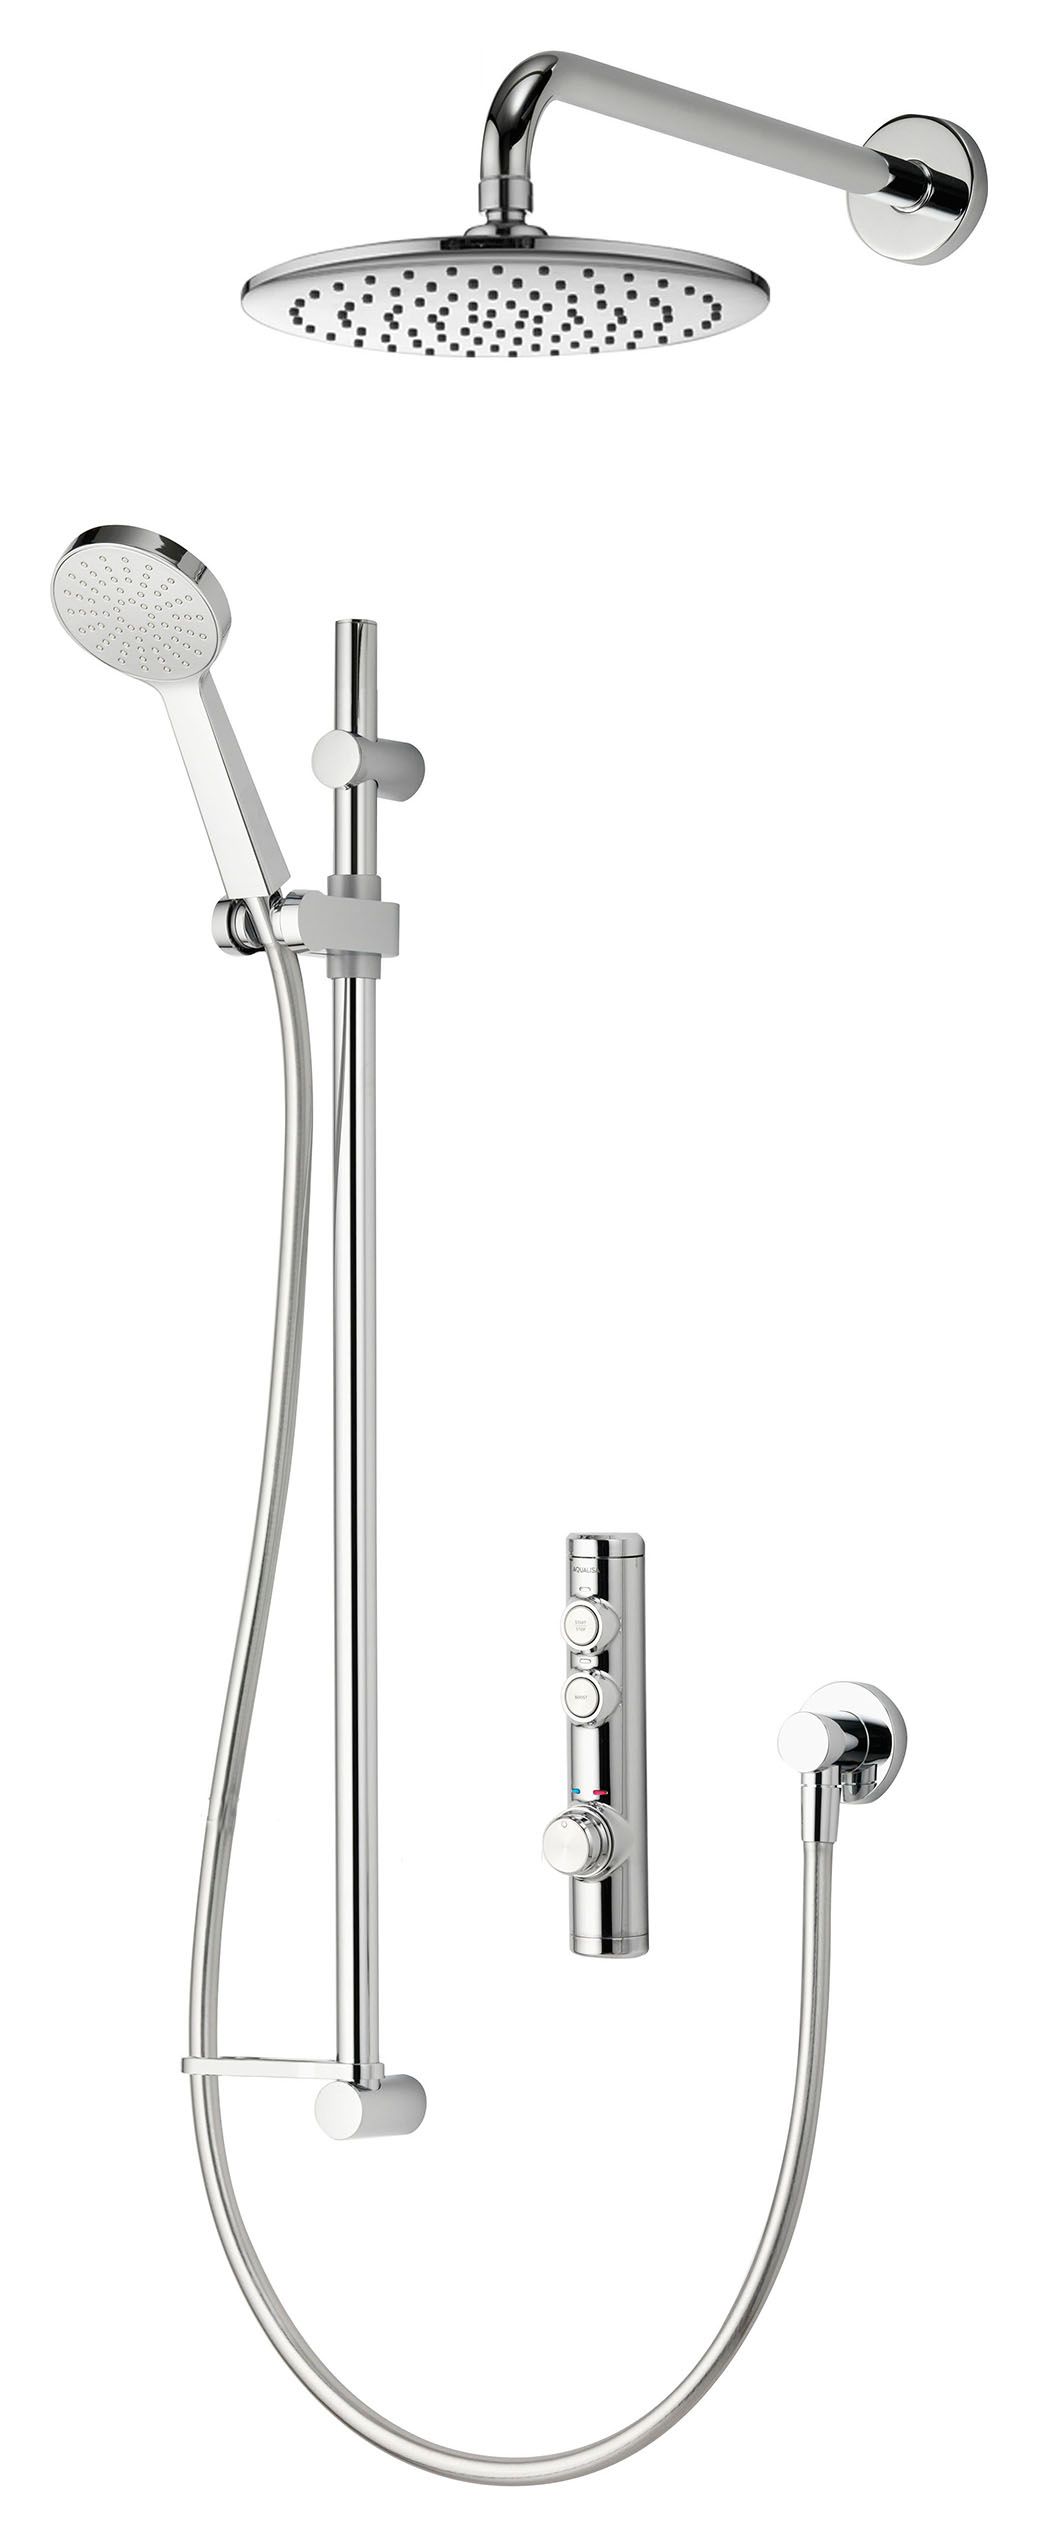 Image of Aqualisa iSystem High Pressure Digital Concealed Shower Divert with Adjustable Wall Shower Head - Combi